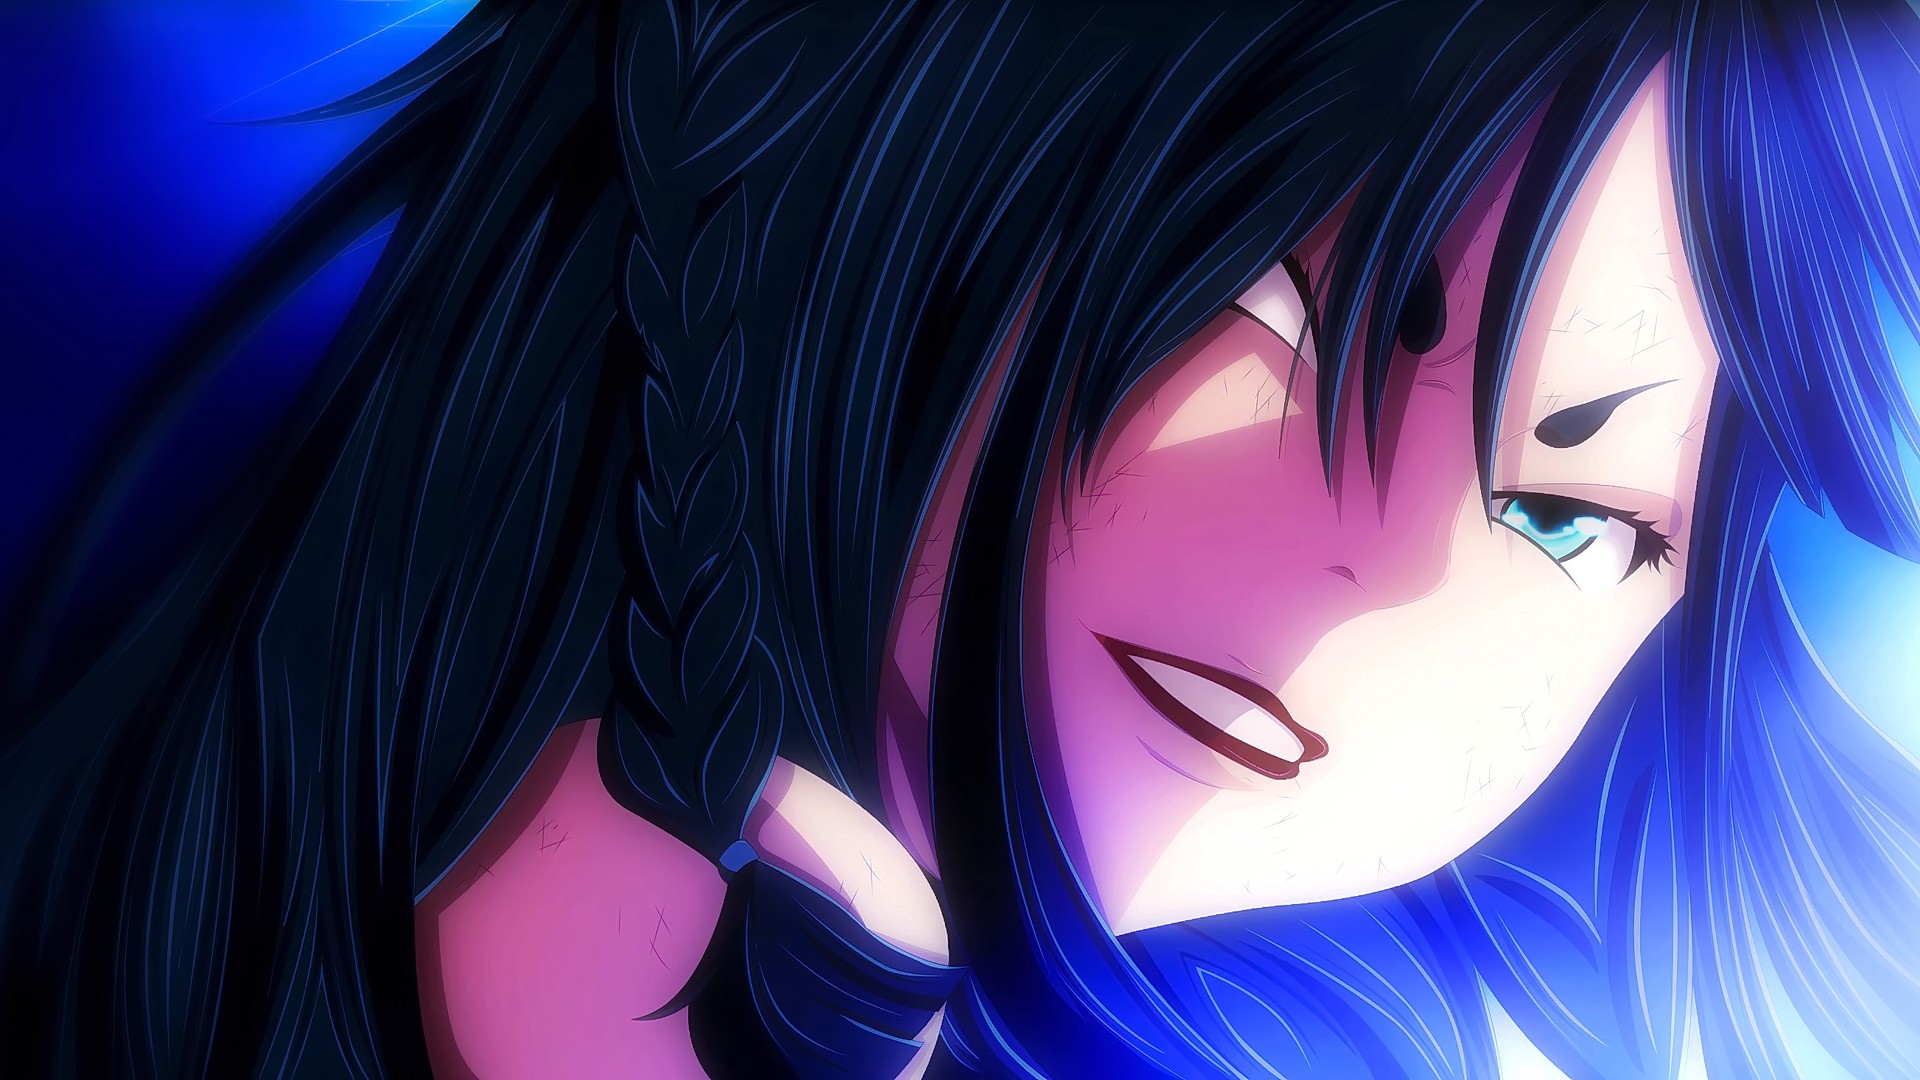 Anime Anime Girls Fairy Tail Brunette Long Hair Blue Eyes Smiling Looking Away 1920x1080